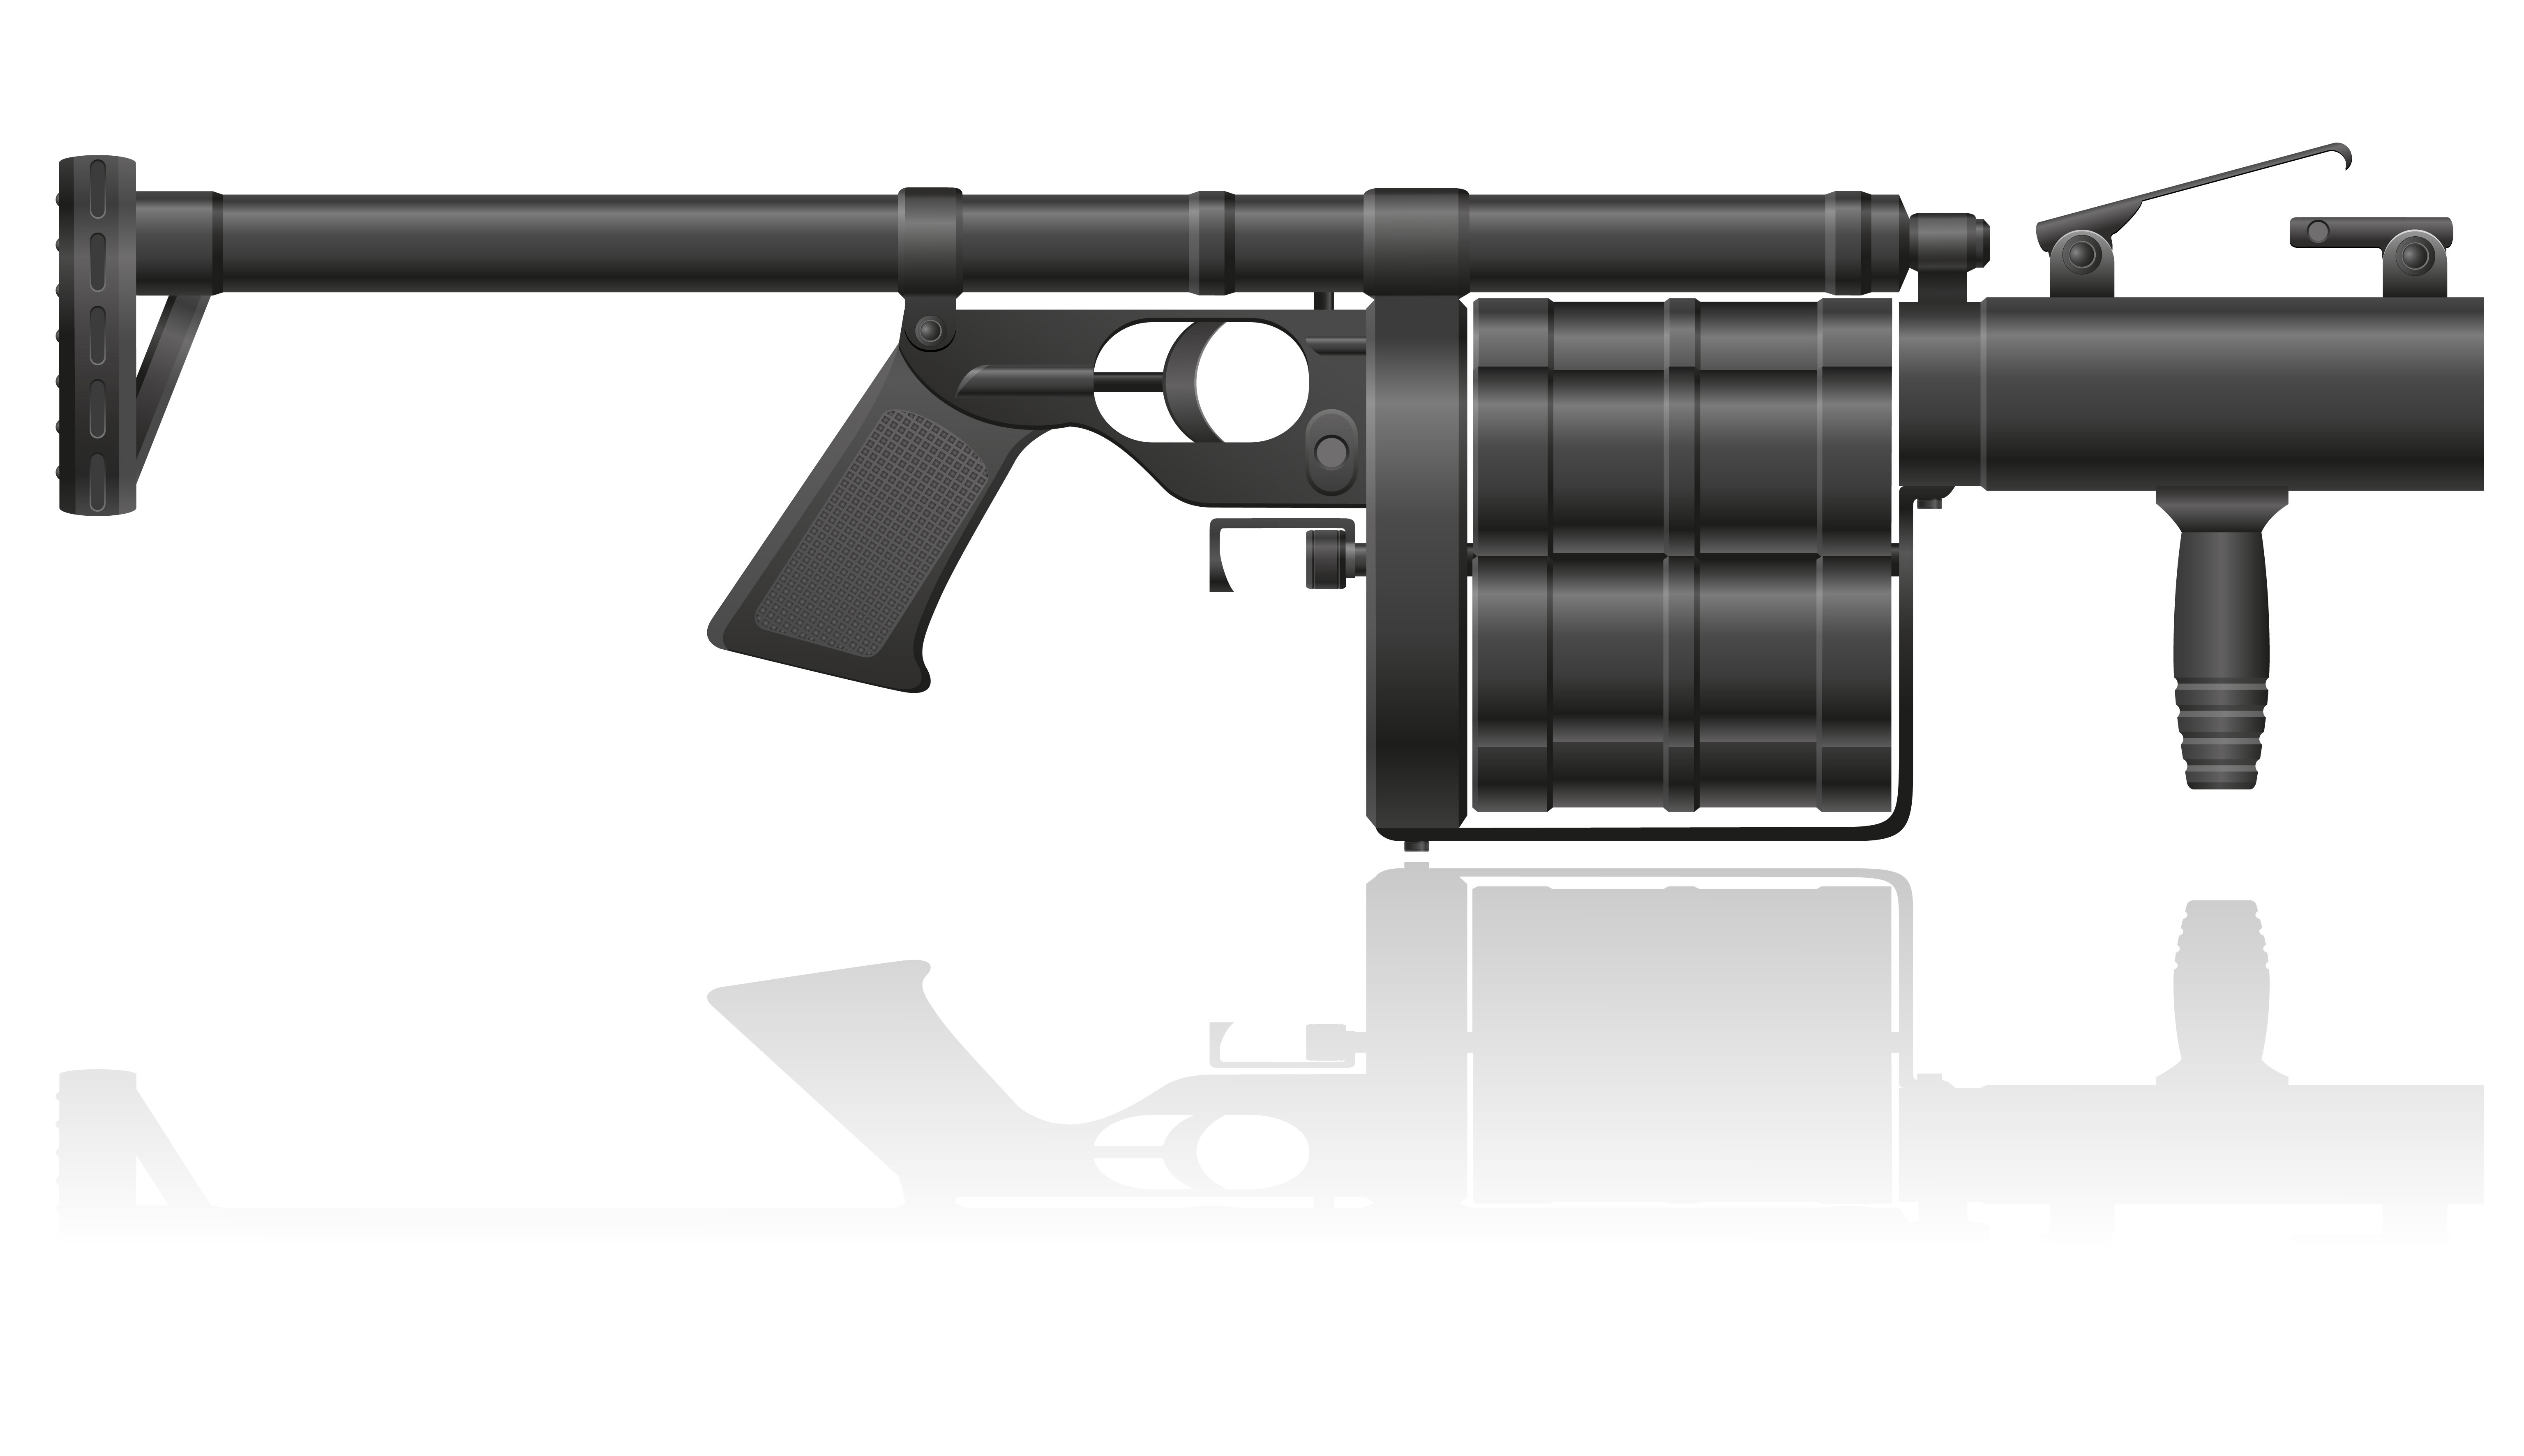 Download grenade-gun vector illustration 513618 - Download Free Vectors, Clipart Graphics & Vector Art